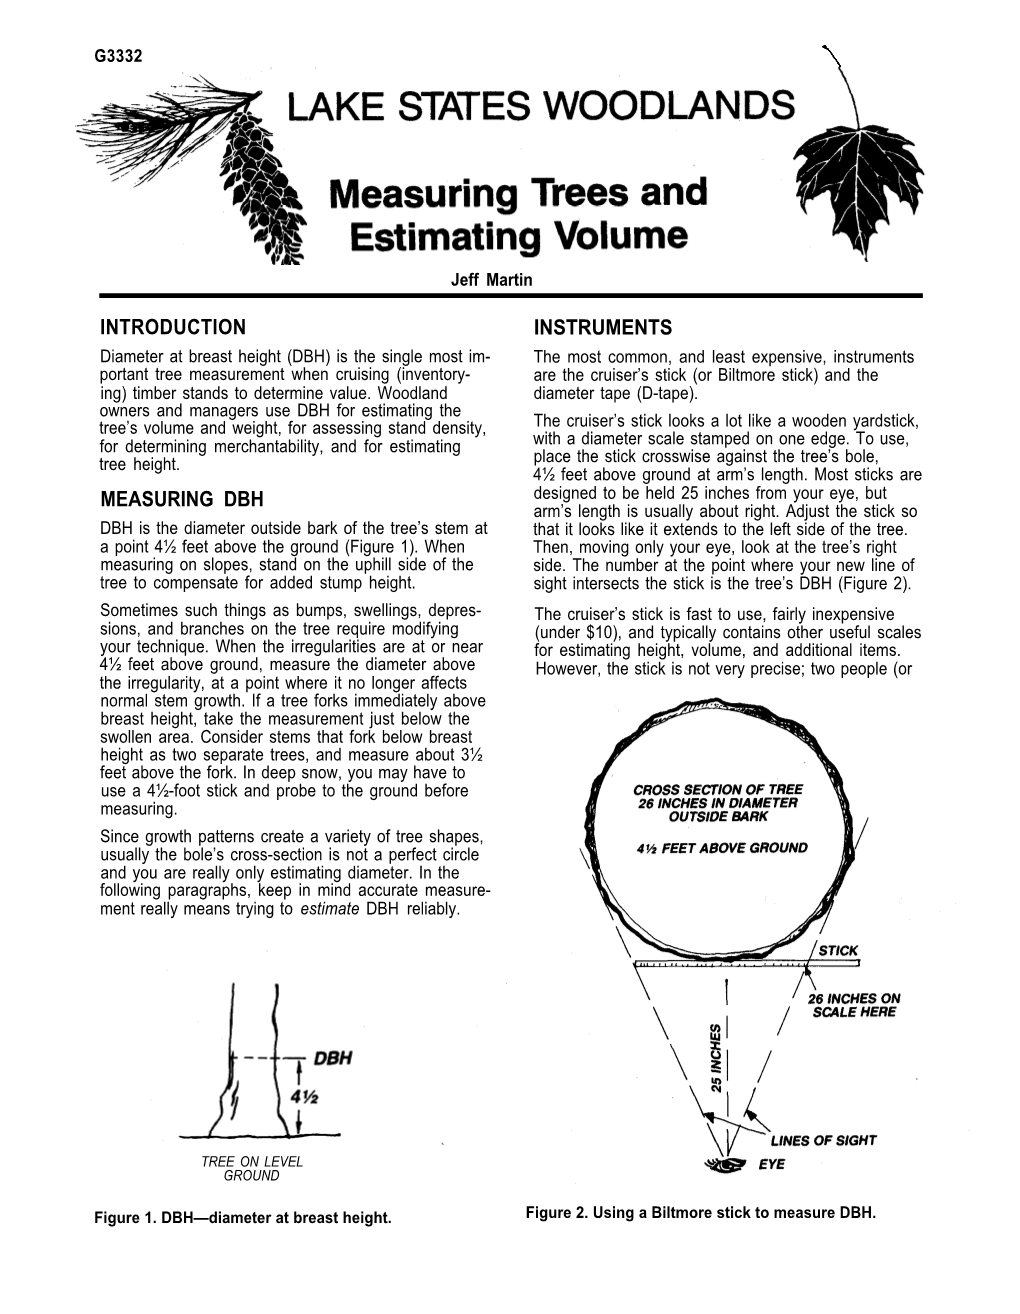 LAKE STATES WOODLANDS: Measuring Trees and Estimating Volume